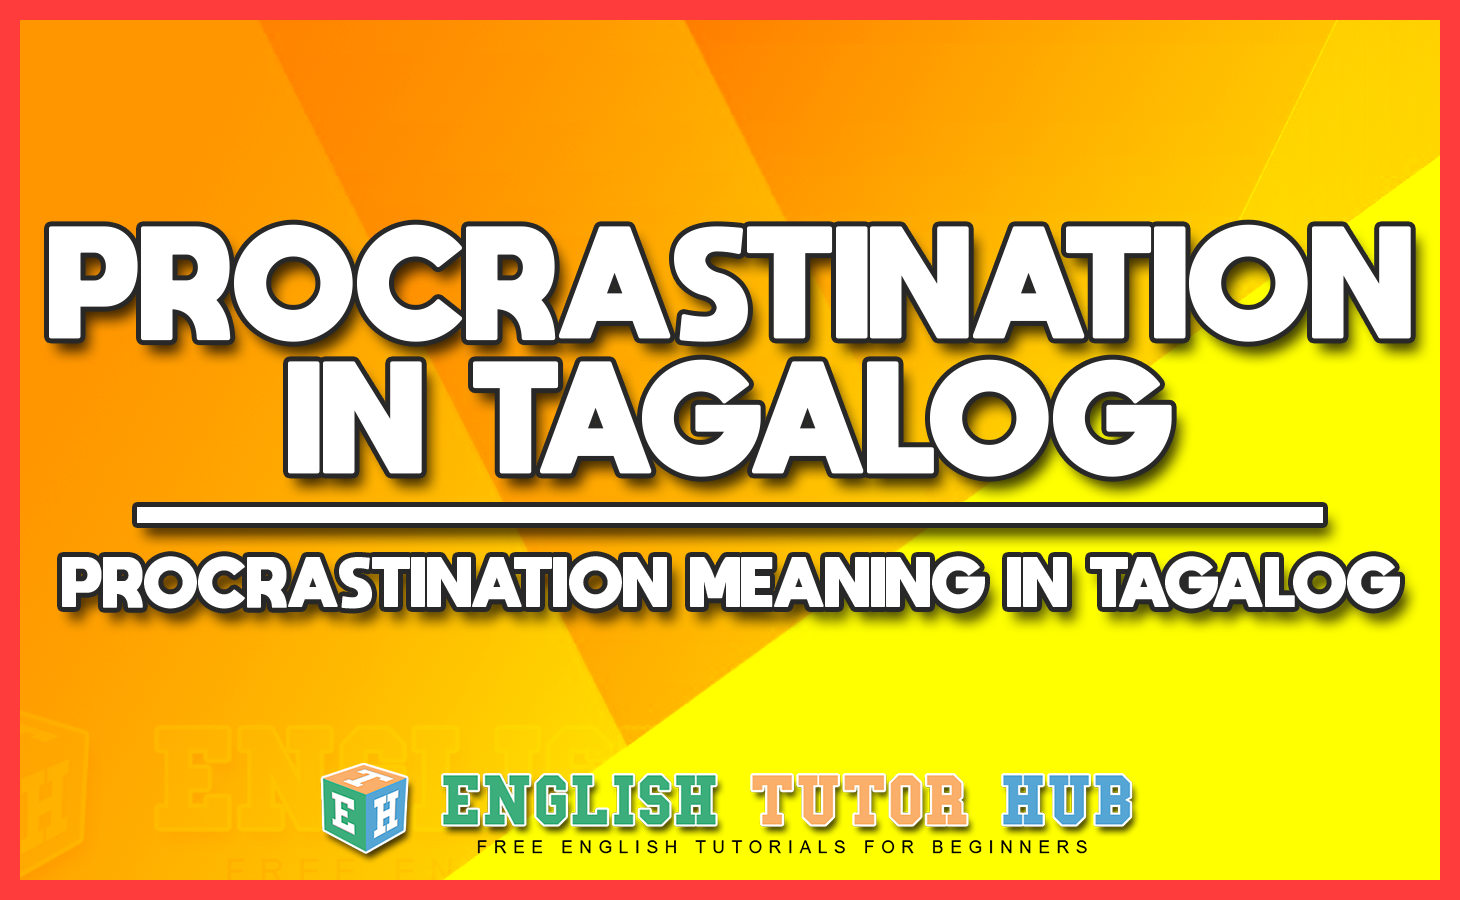 PROCRASTINATION IN TAGALOG - PROCRASTINATION MEANING IN TAGALOG